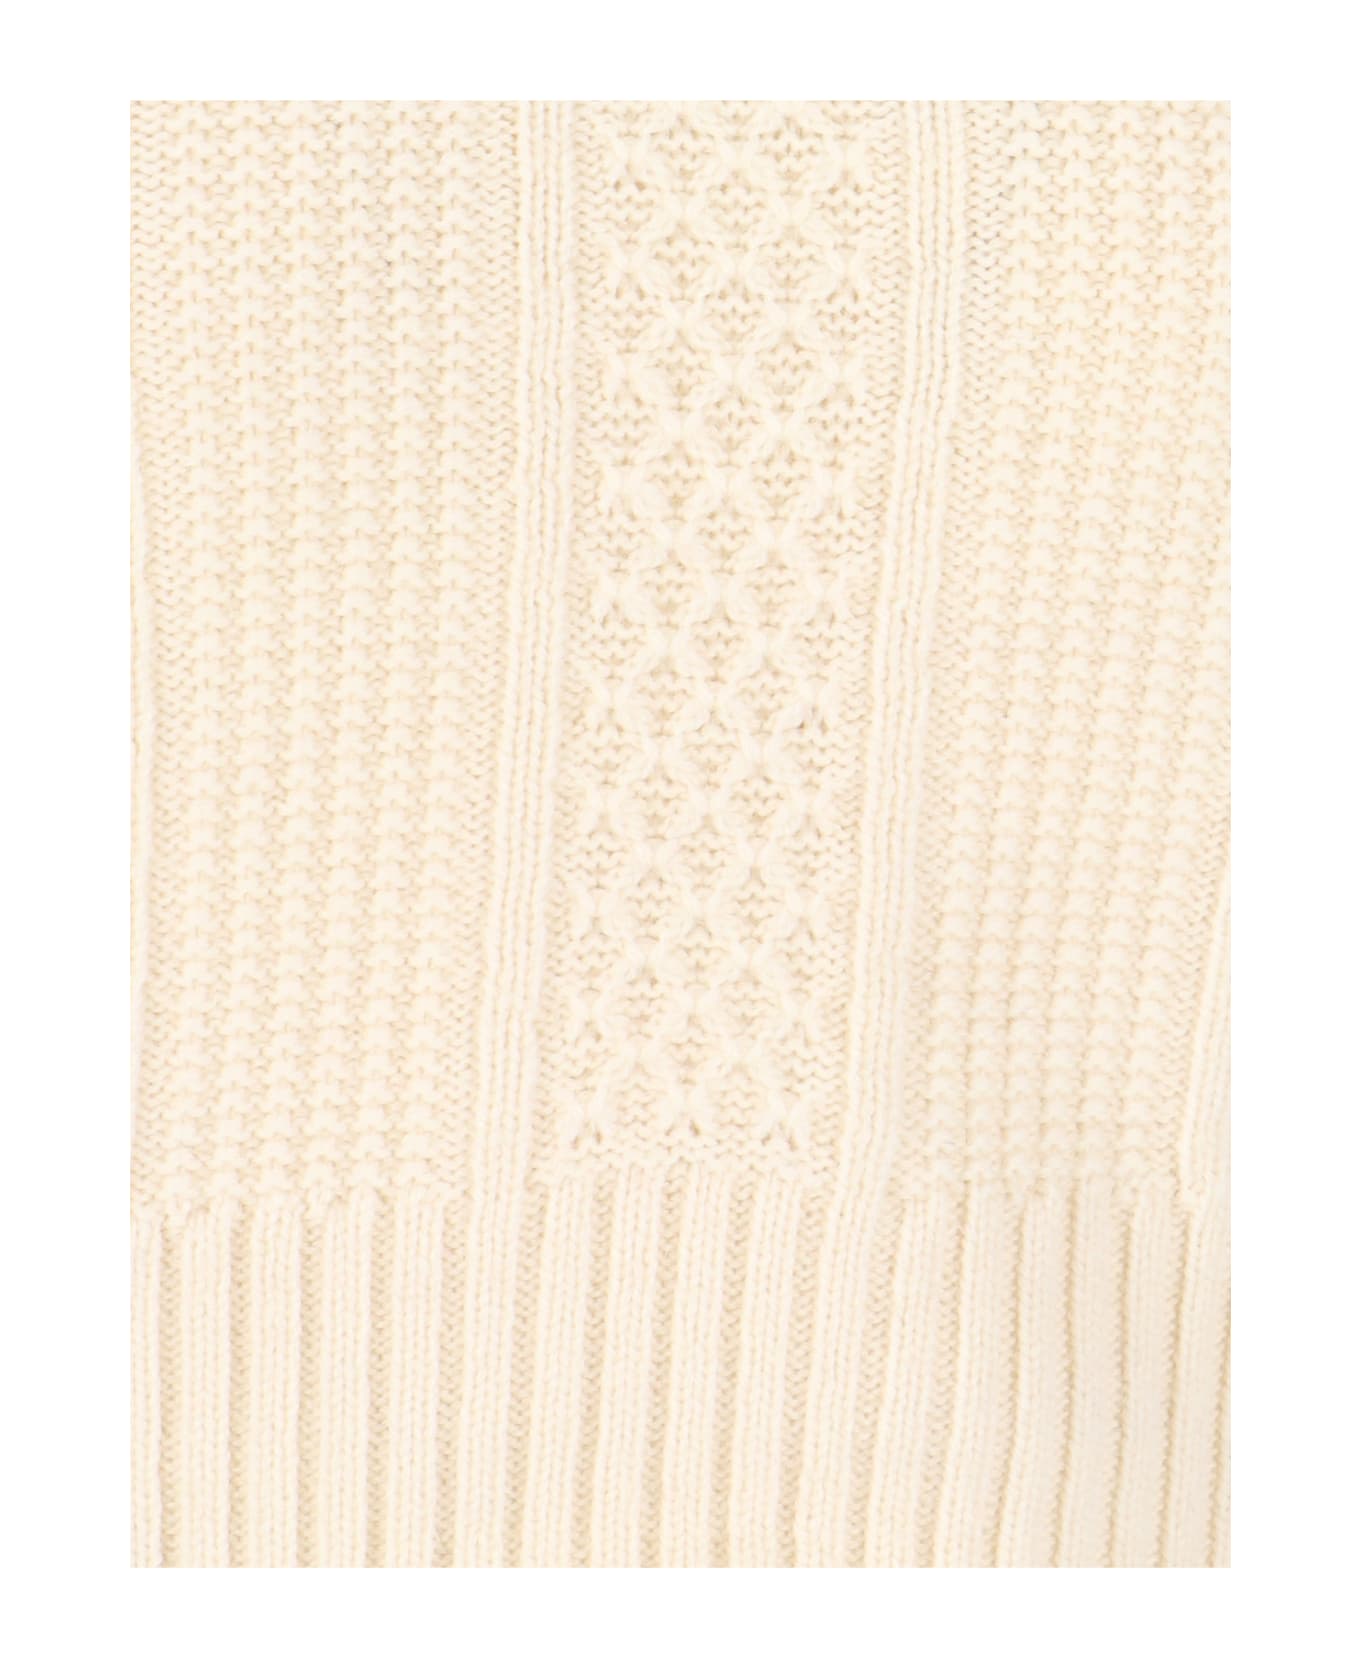 Golden Goose Crystal Crop Sweater - Cream ニットウェア